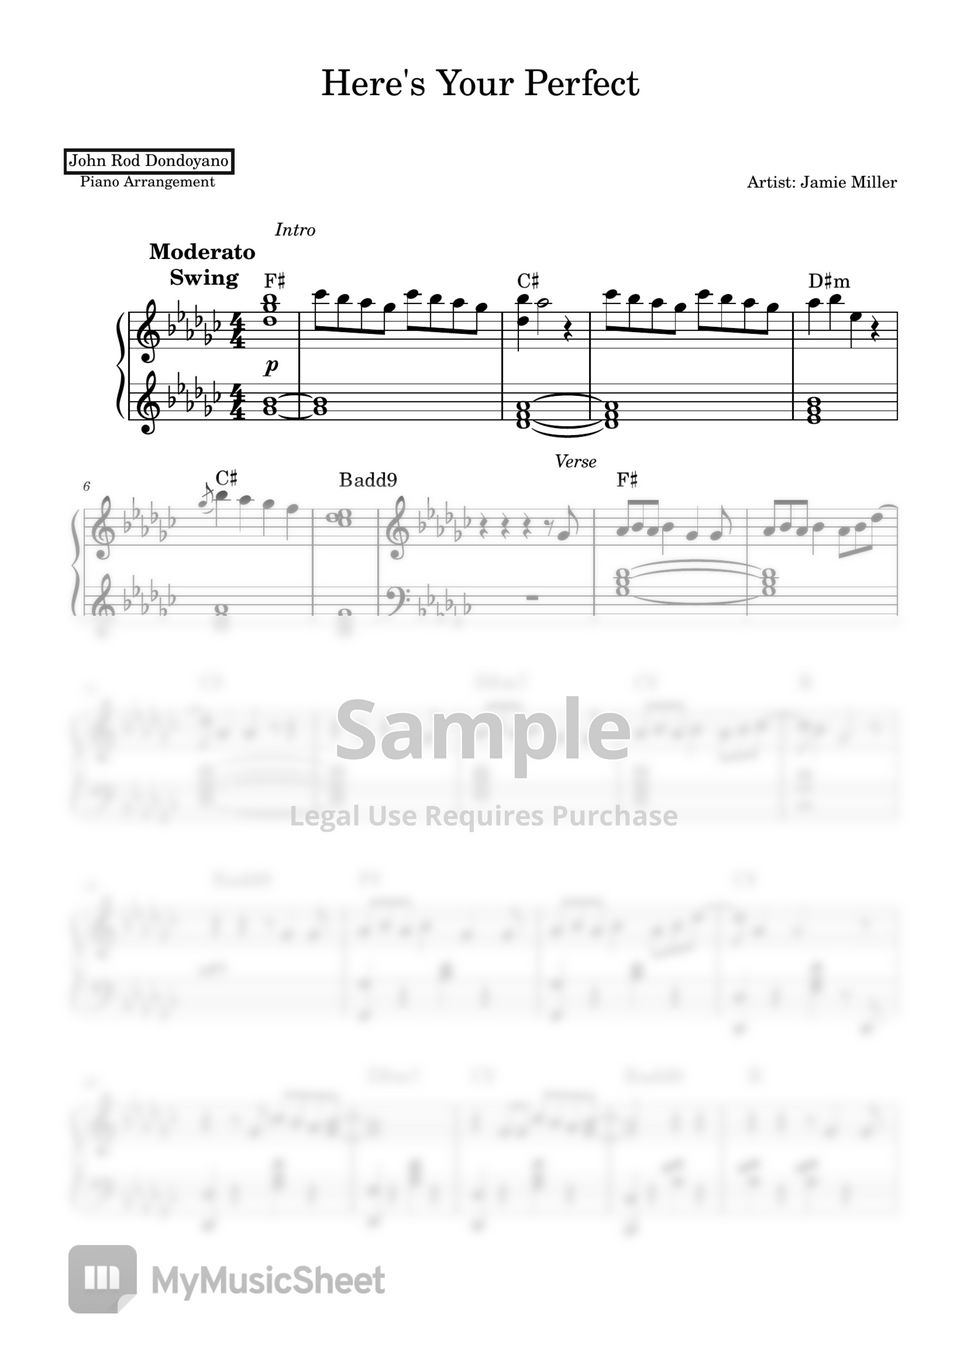 Jamie Miller - Here's Your Perfect (PIANO SHEET) by John Rod Dondoyano